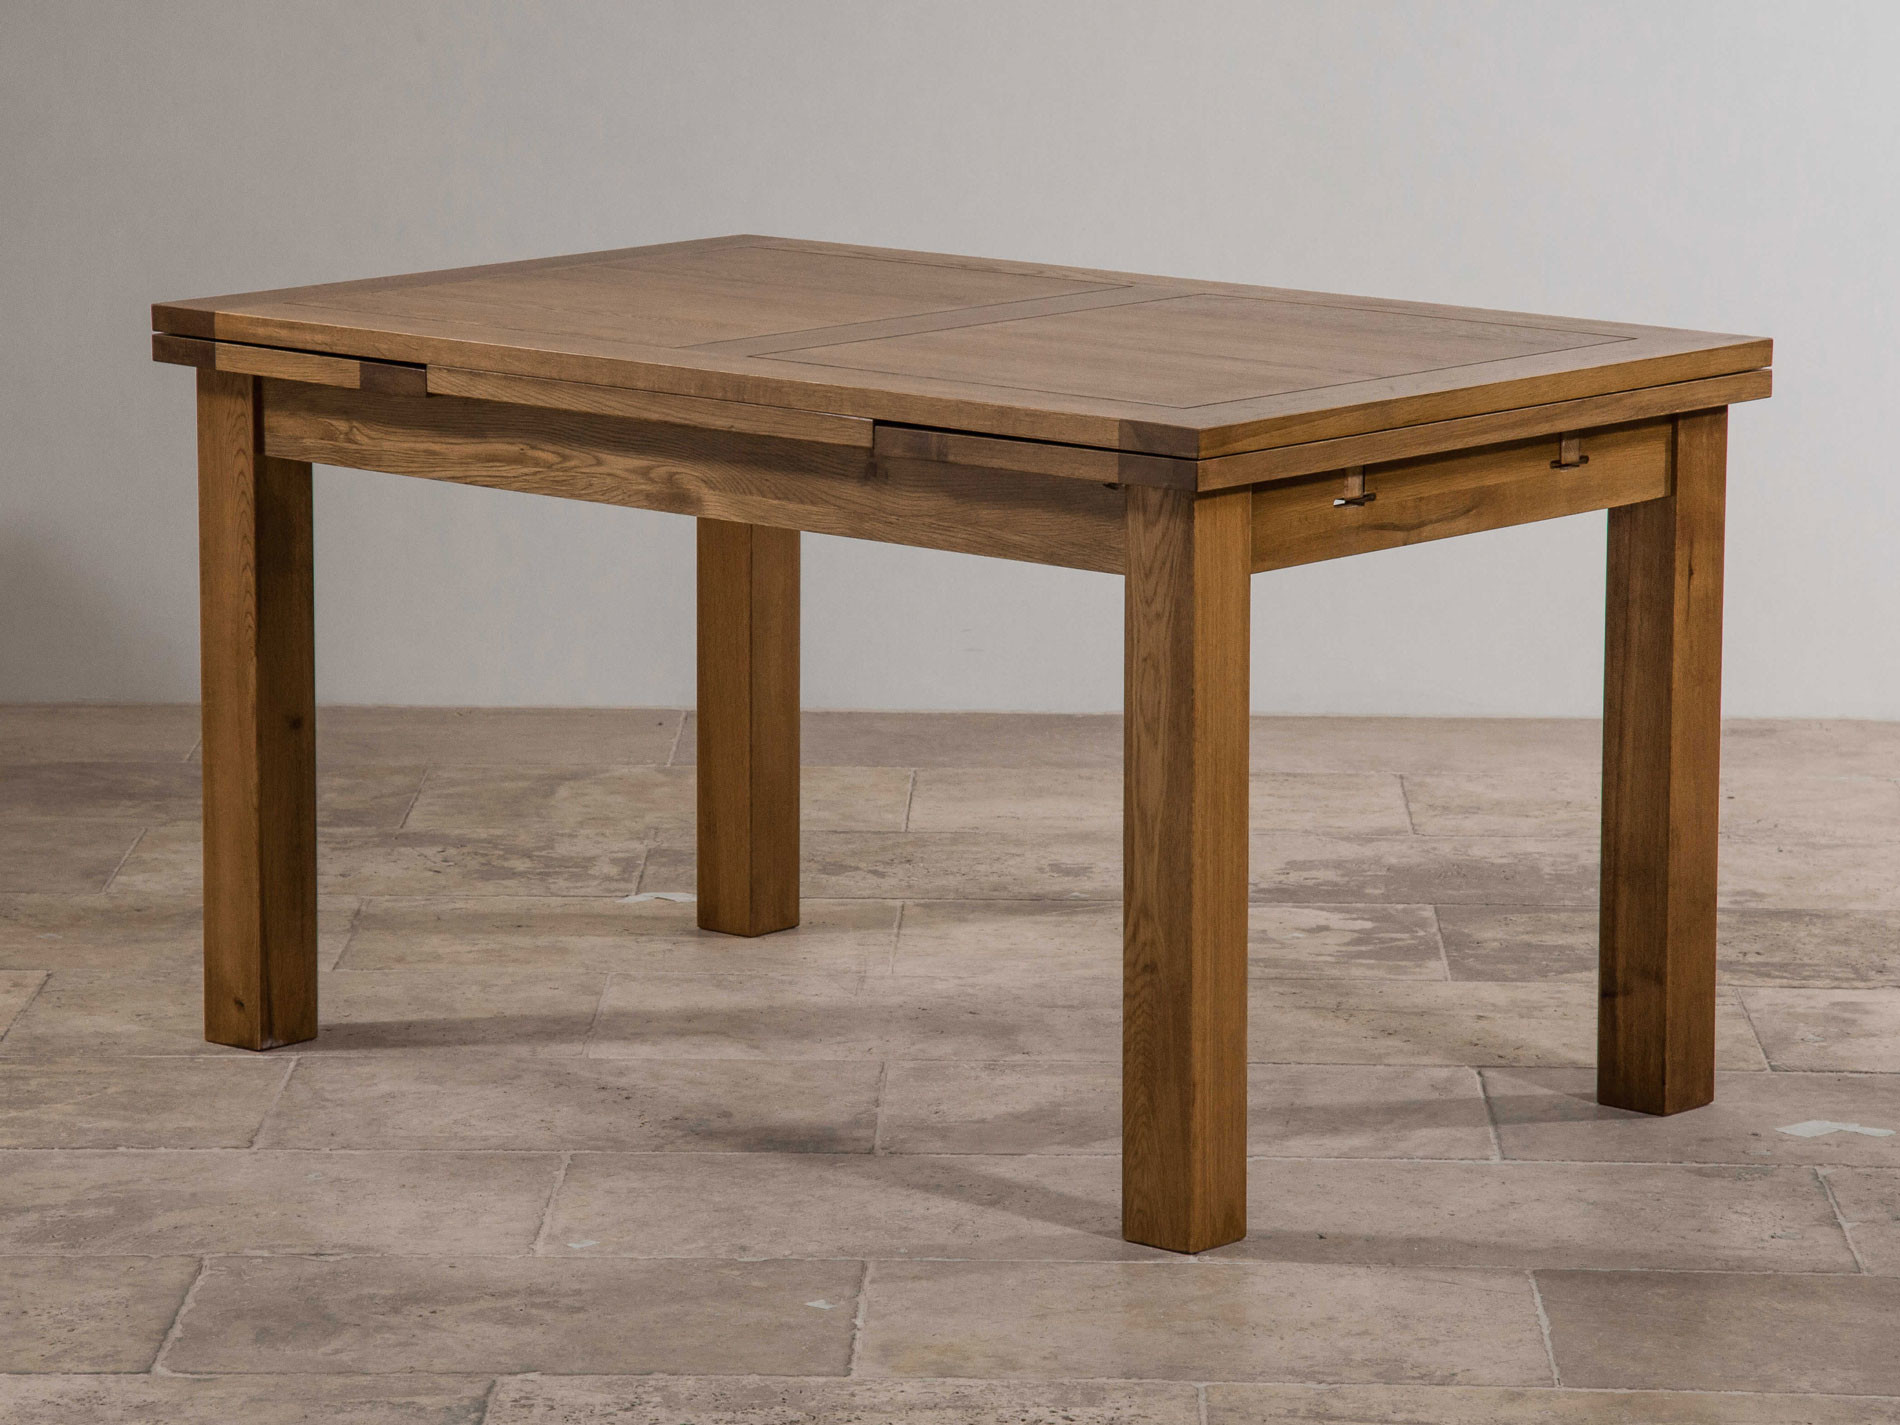 Popular Full Size of Dining Room: Extending Dining Tables Solid Oak Dining Room oak extending dining table